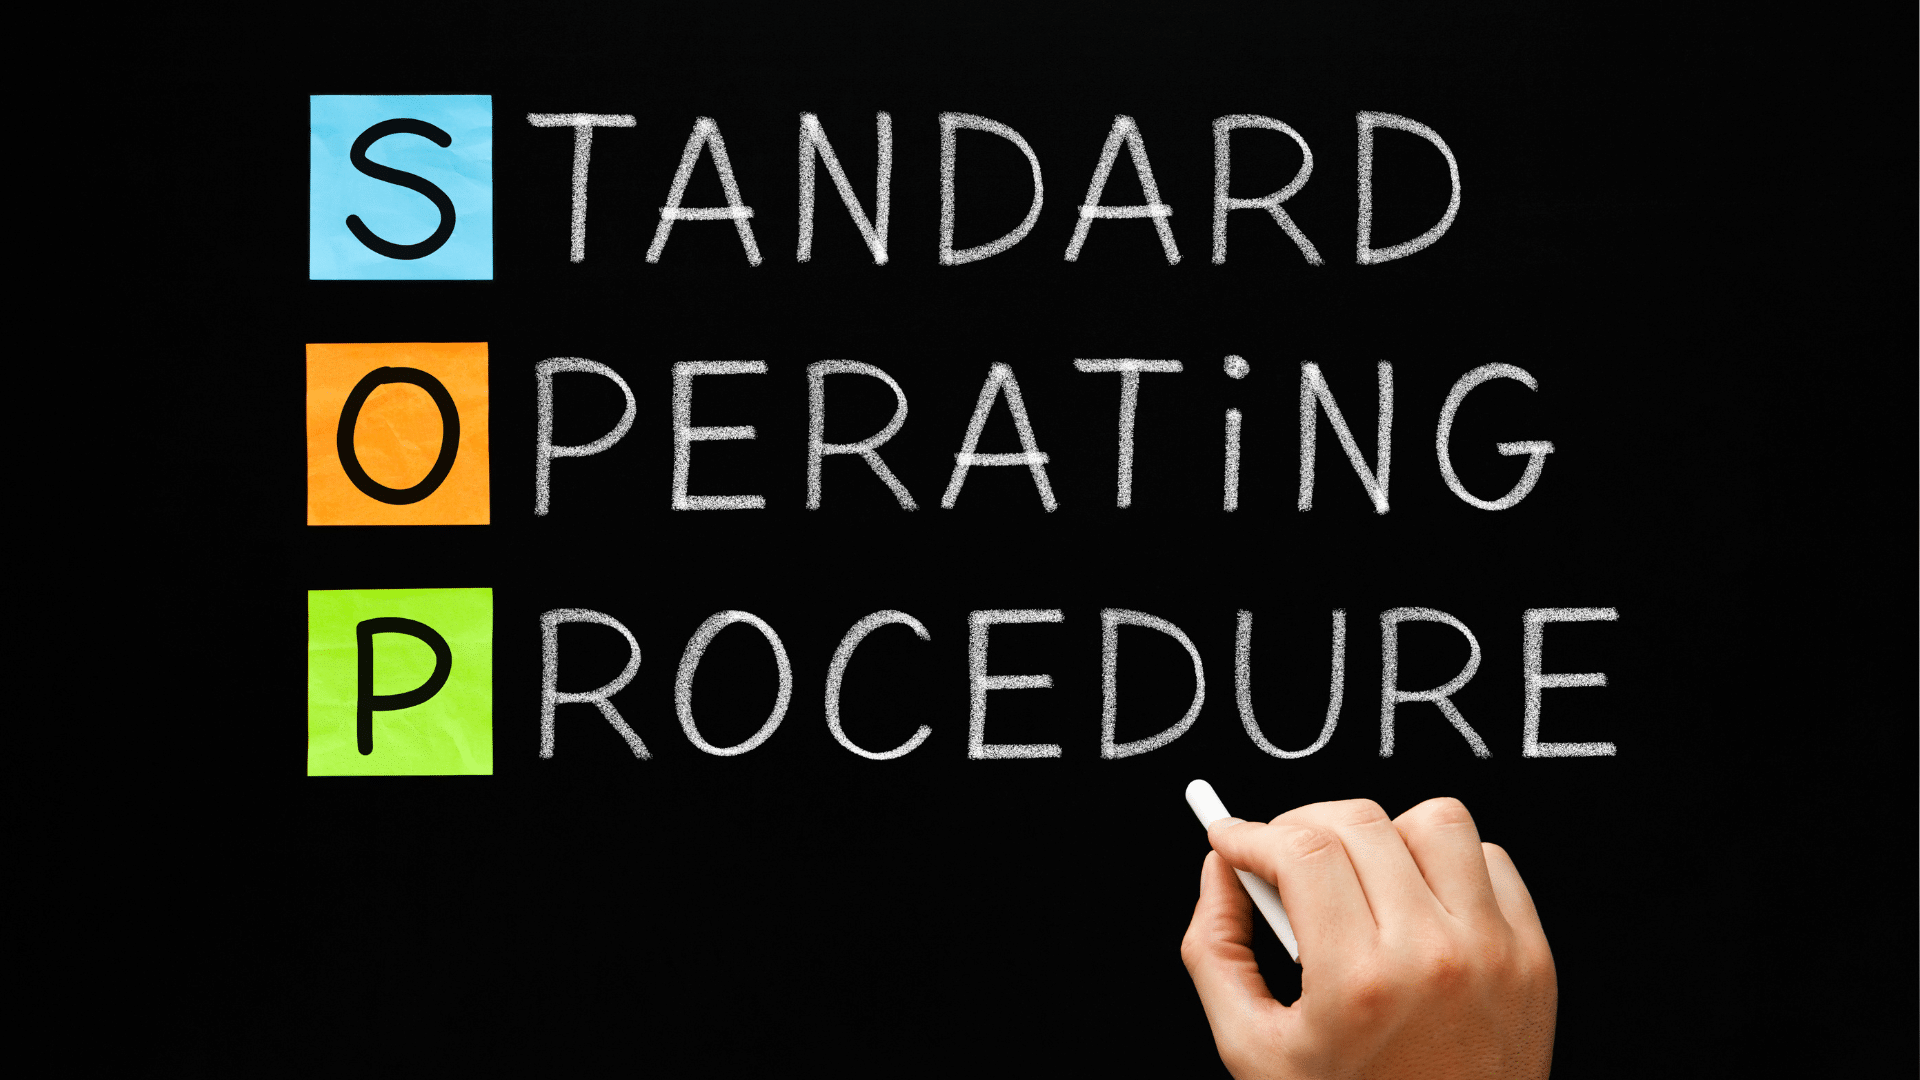 Standard operating procedure